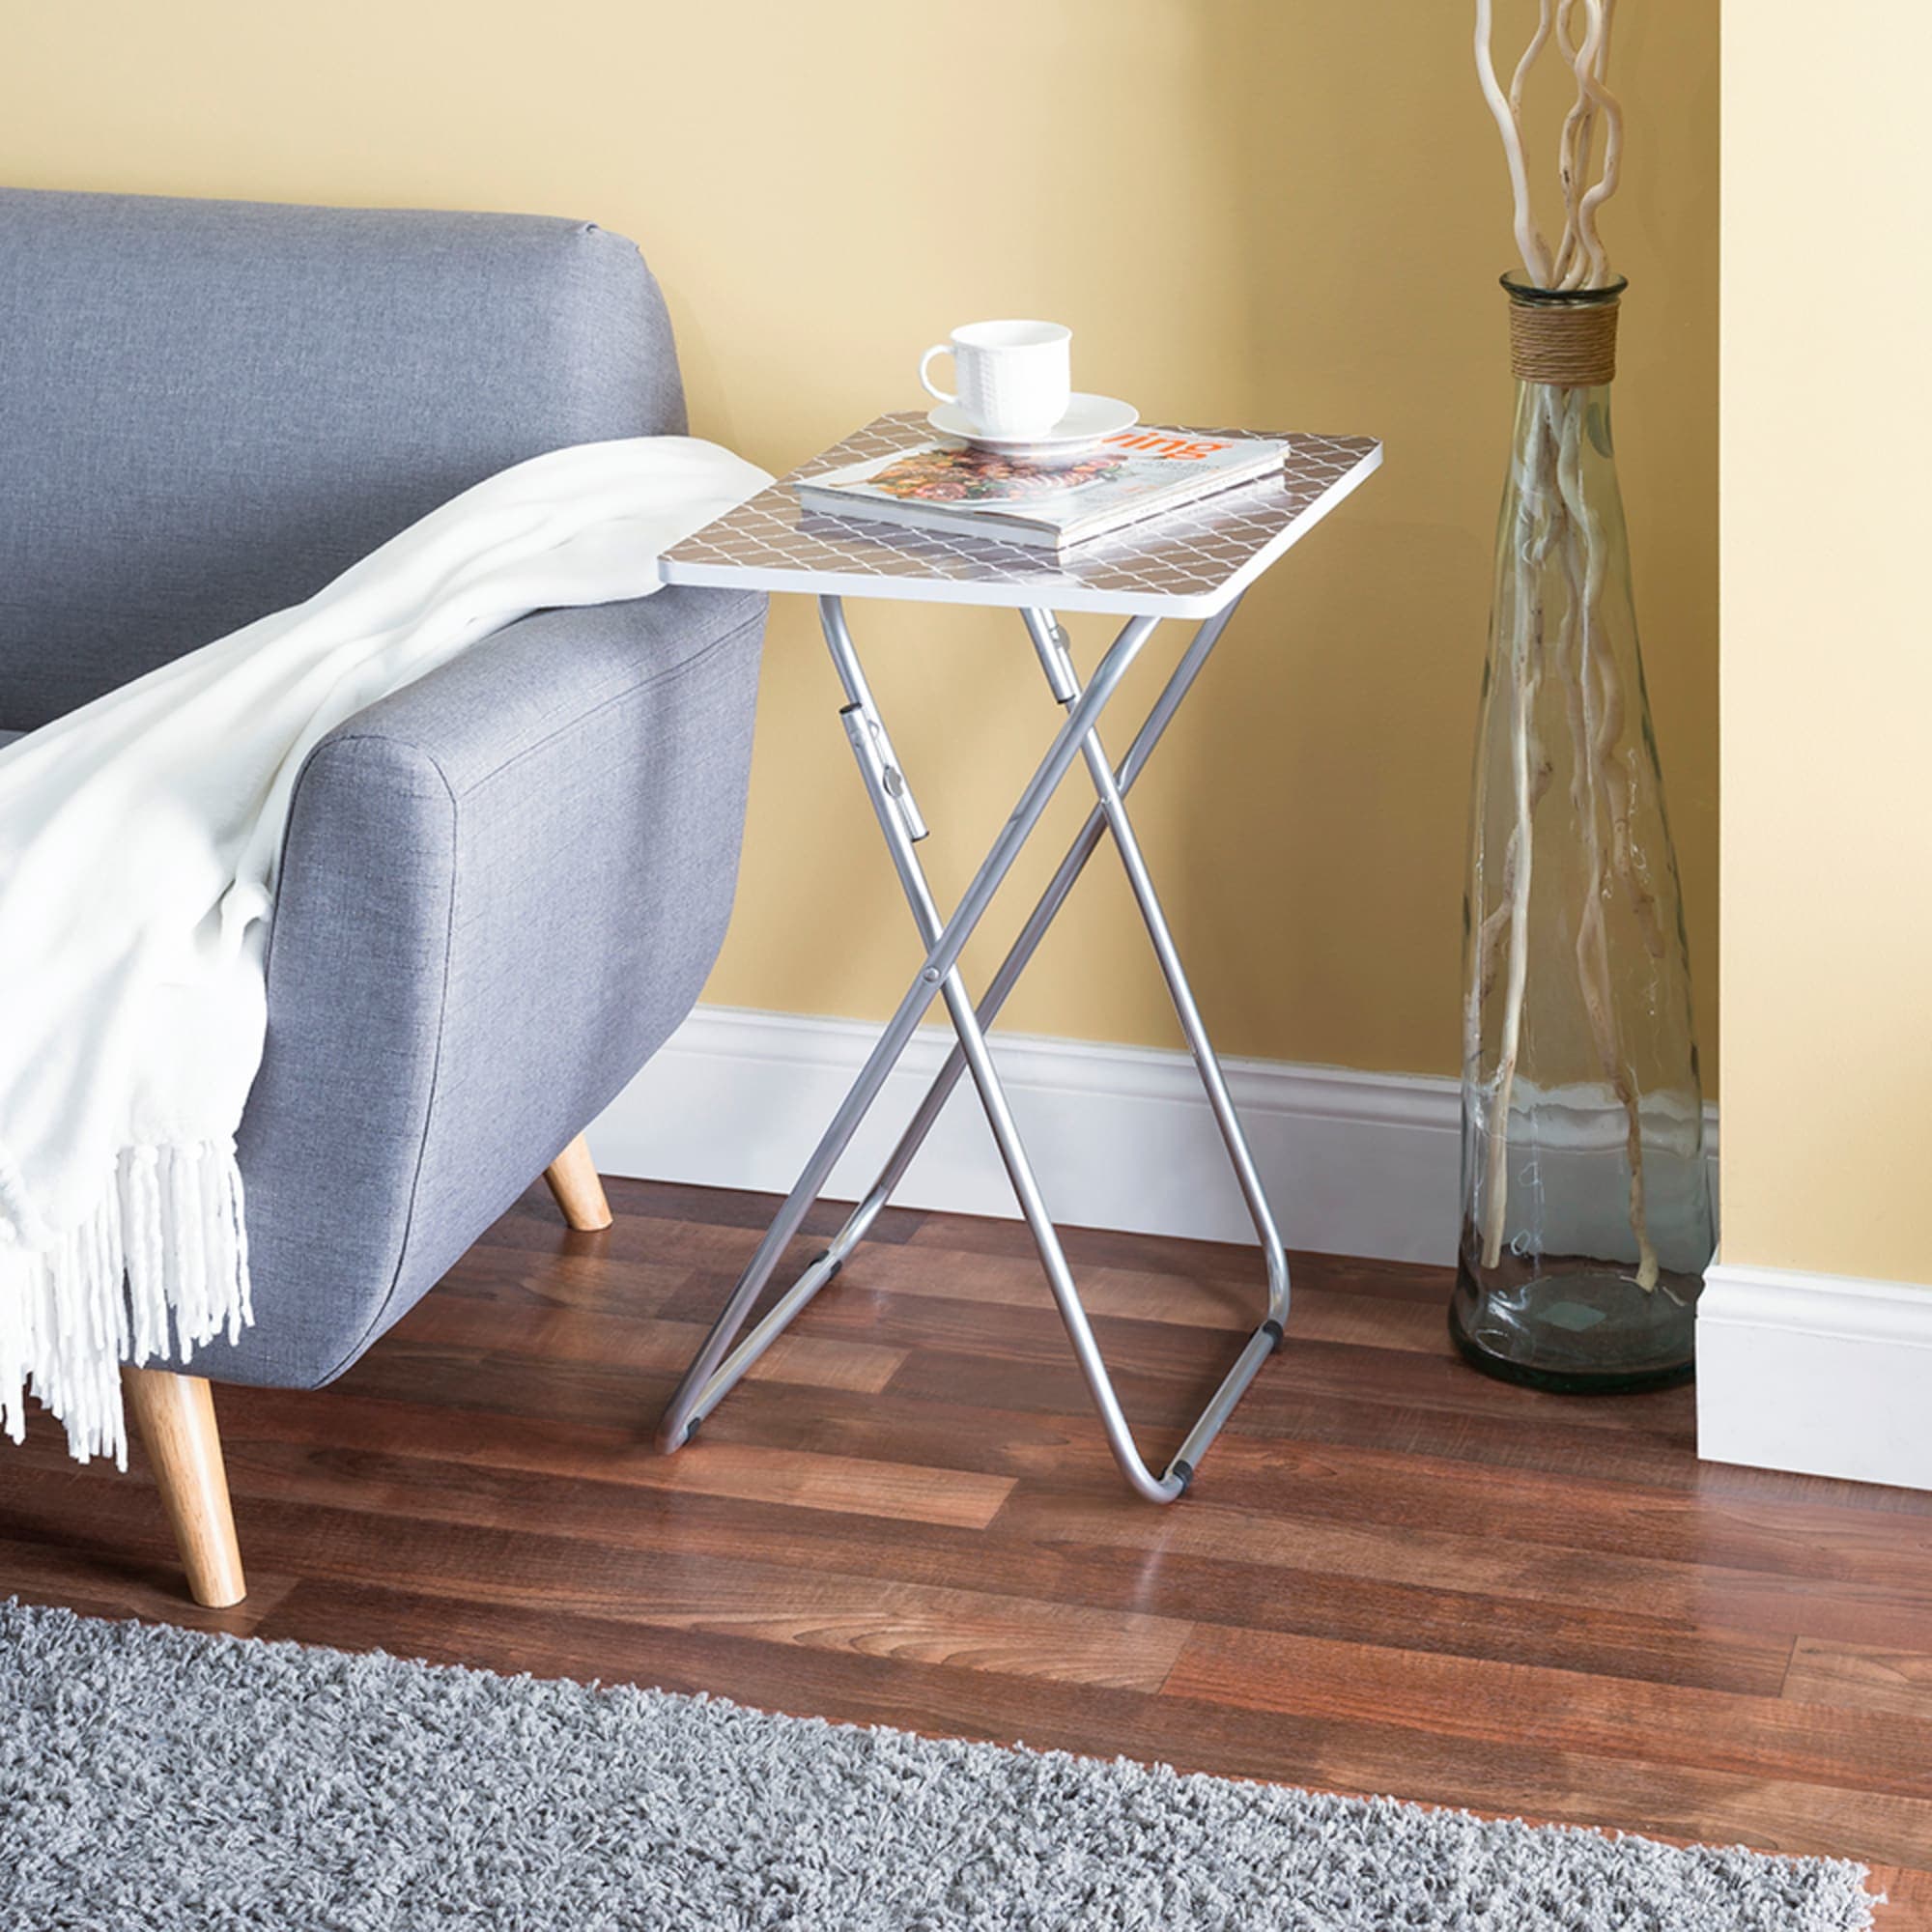 Home Basics Lattice Multi-Purpose Foldable Table, Grey/White $15.00 EACH, CASE PACK OF 6